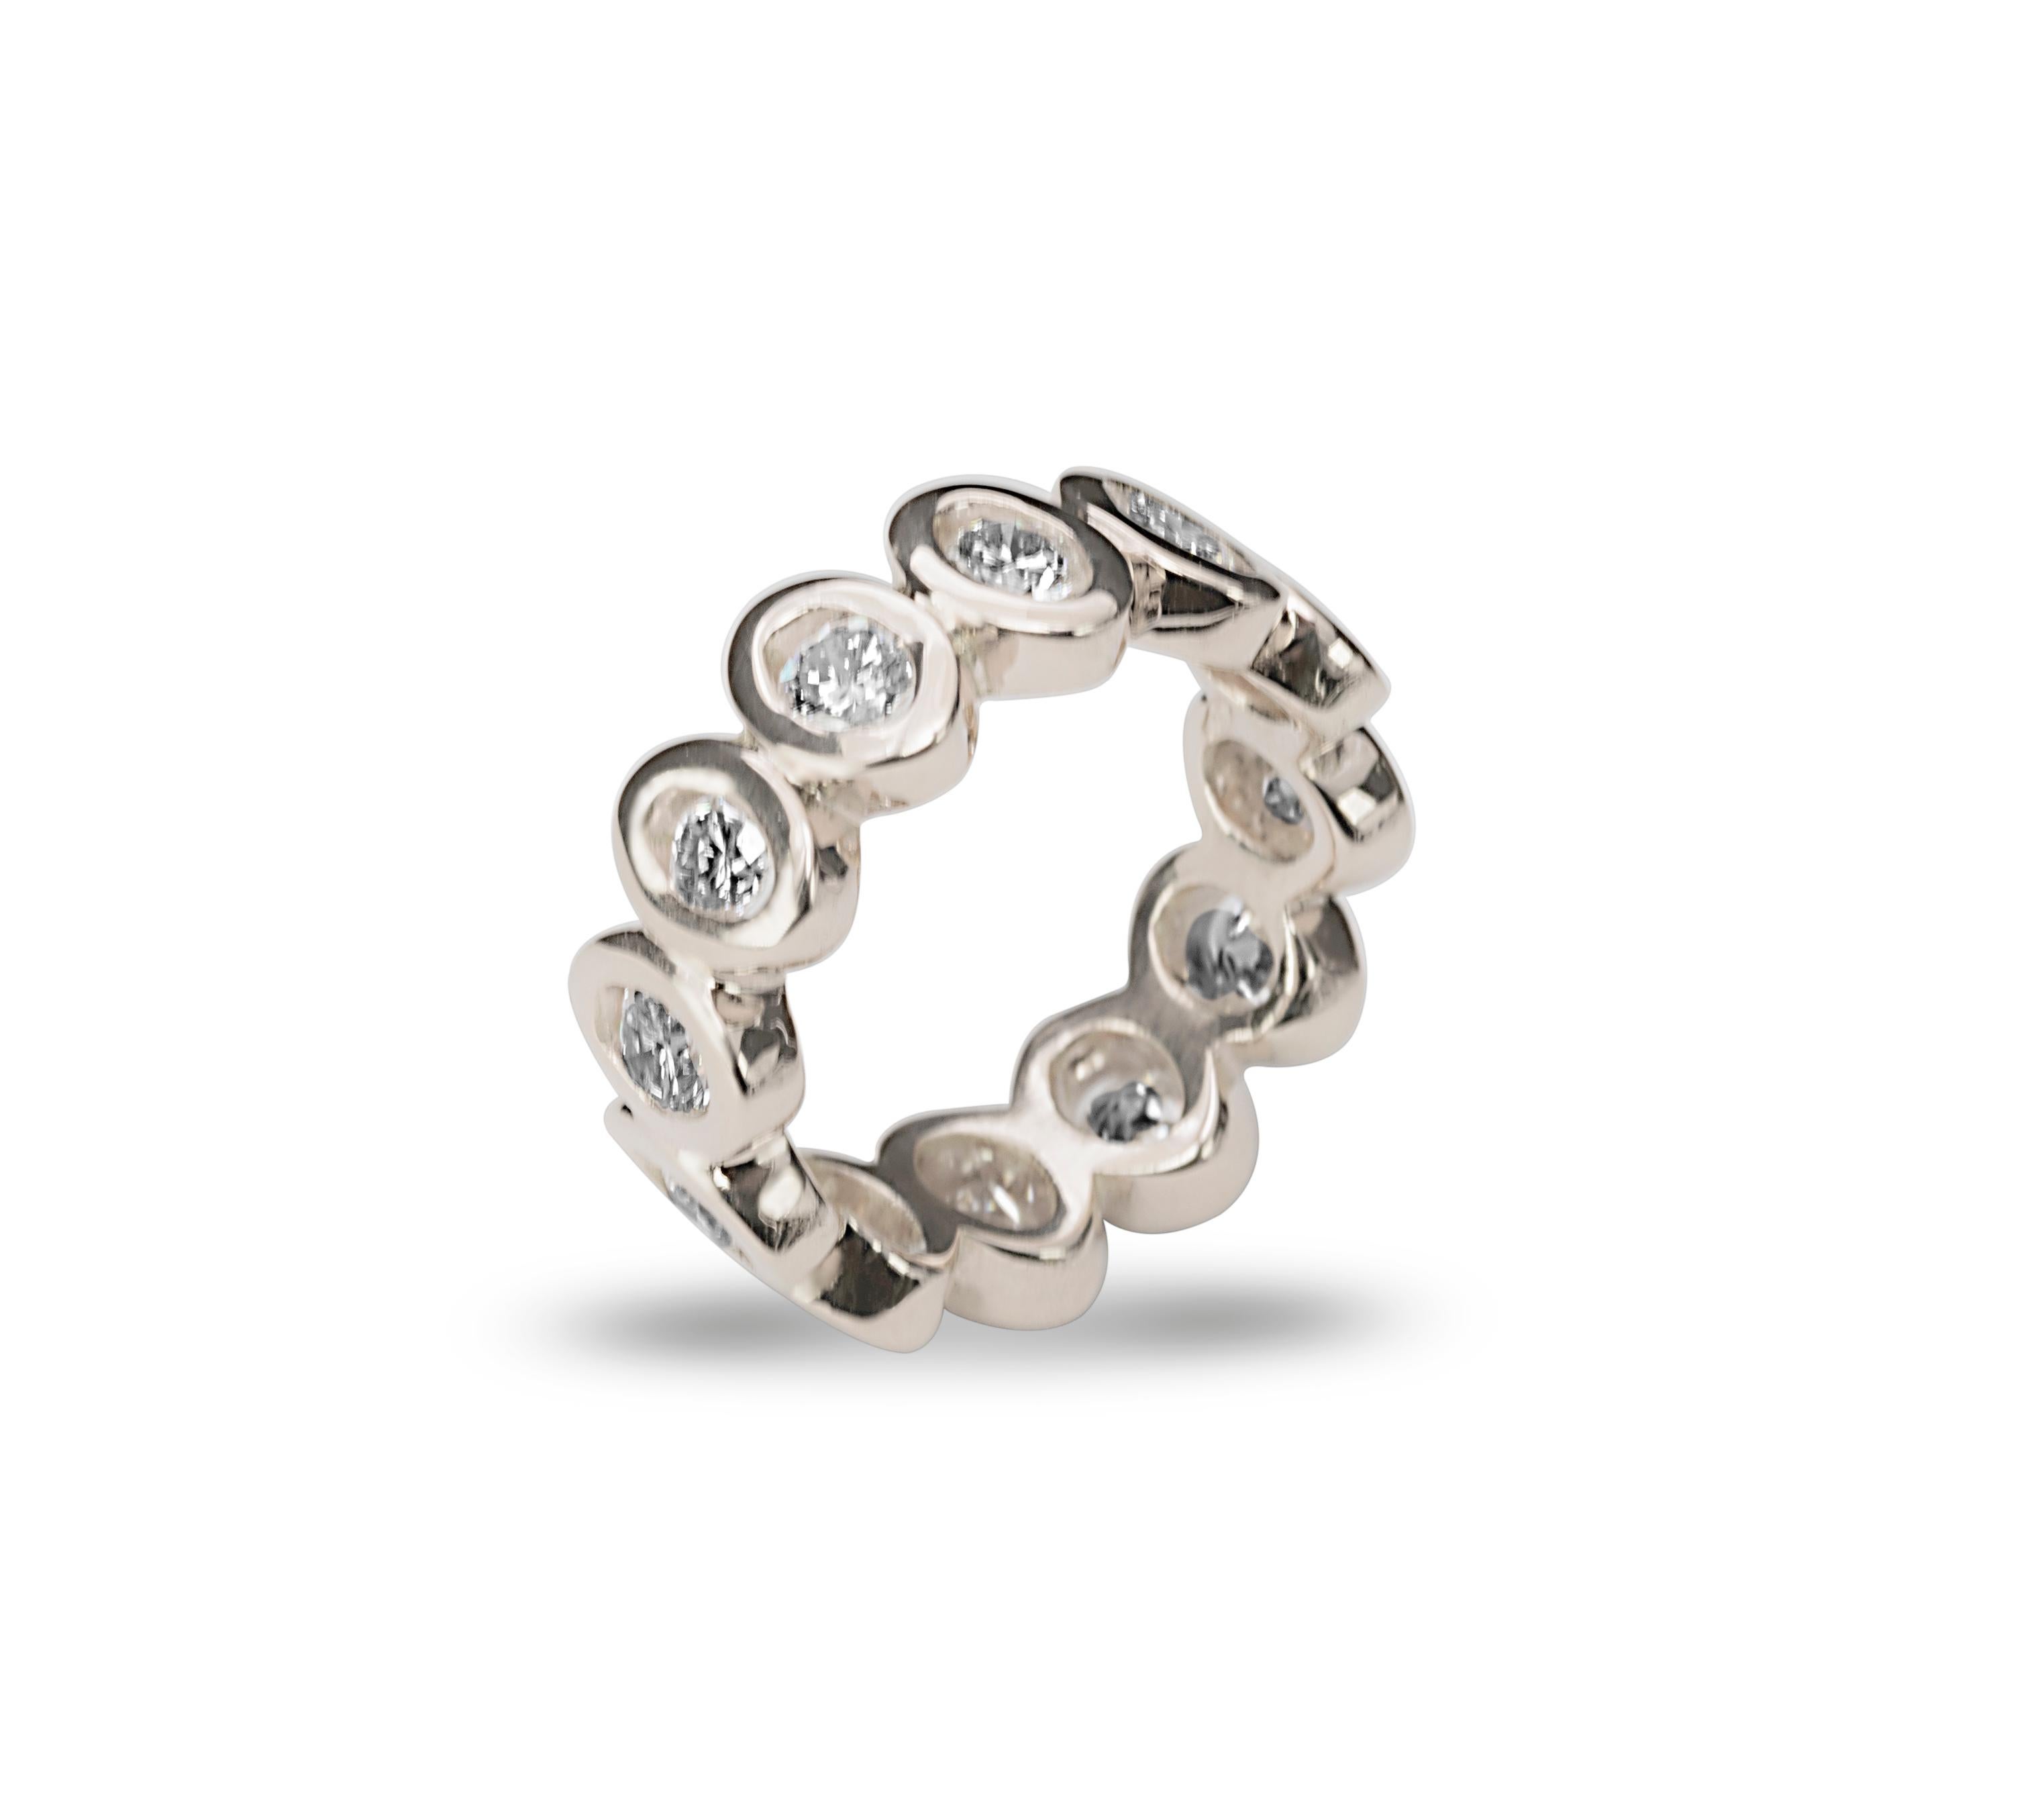 Engagement 3.5 Karats White Diamonds G Color VVS1 18 Karats White Gold Ring For Sale 1